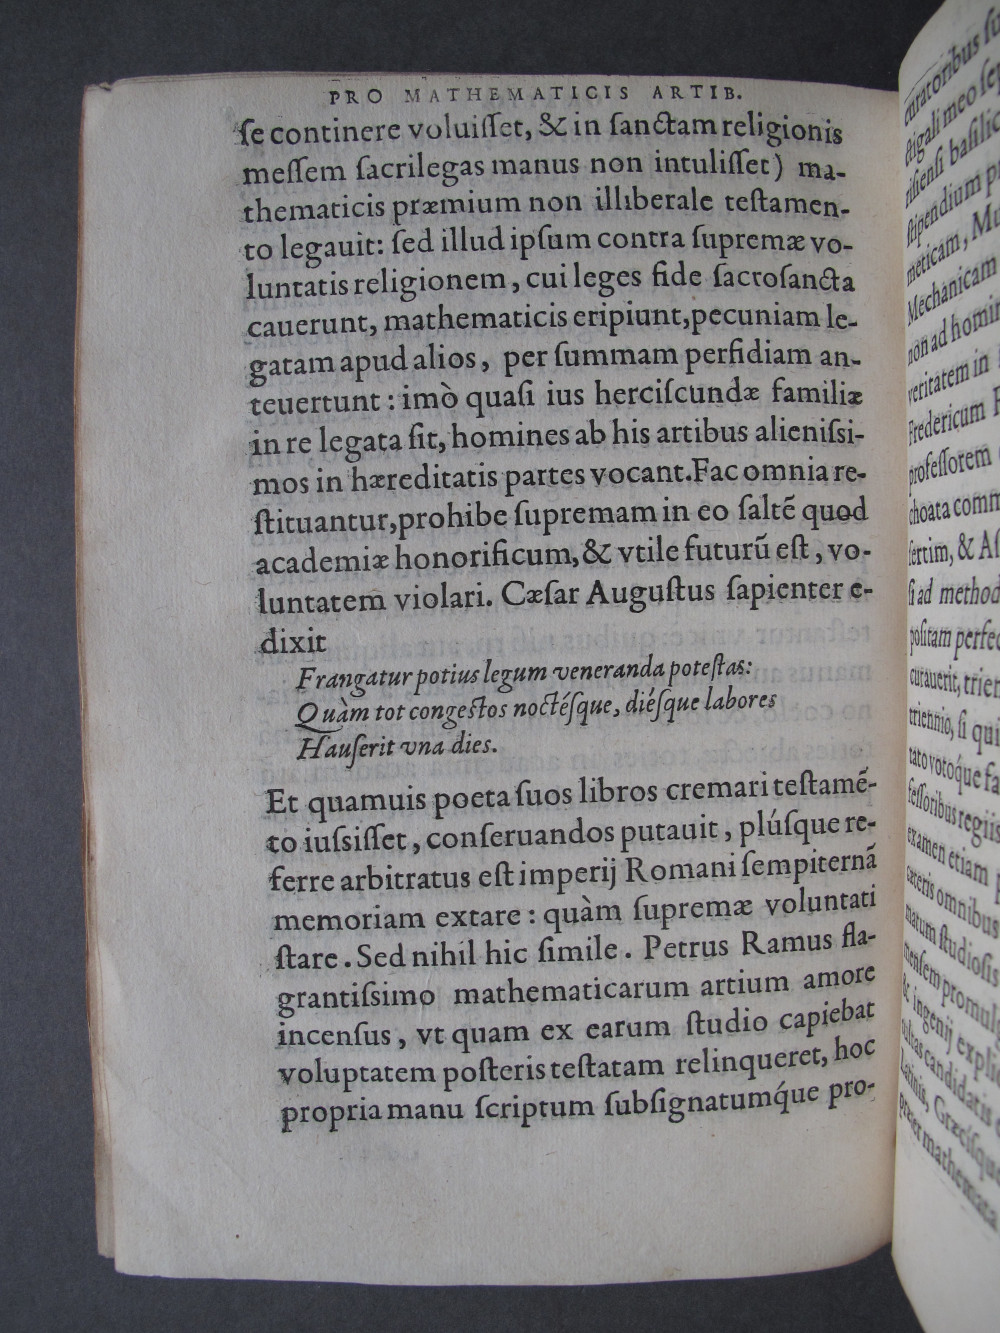 Folio 3 verso